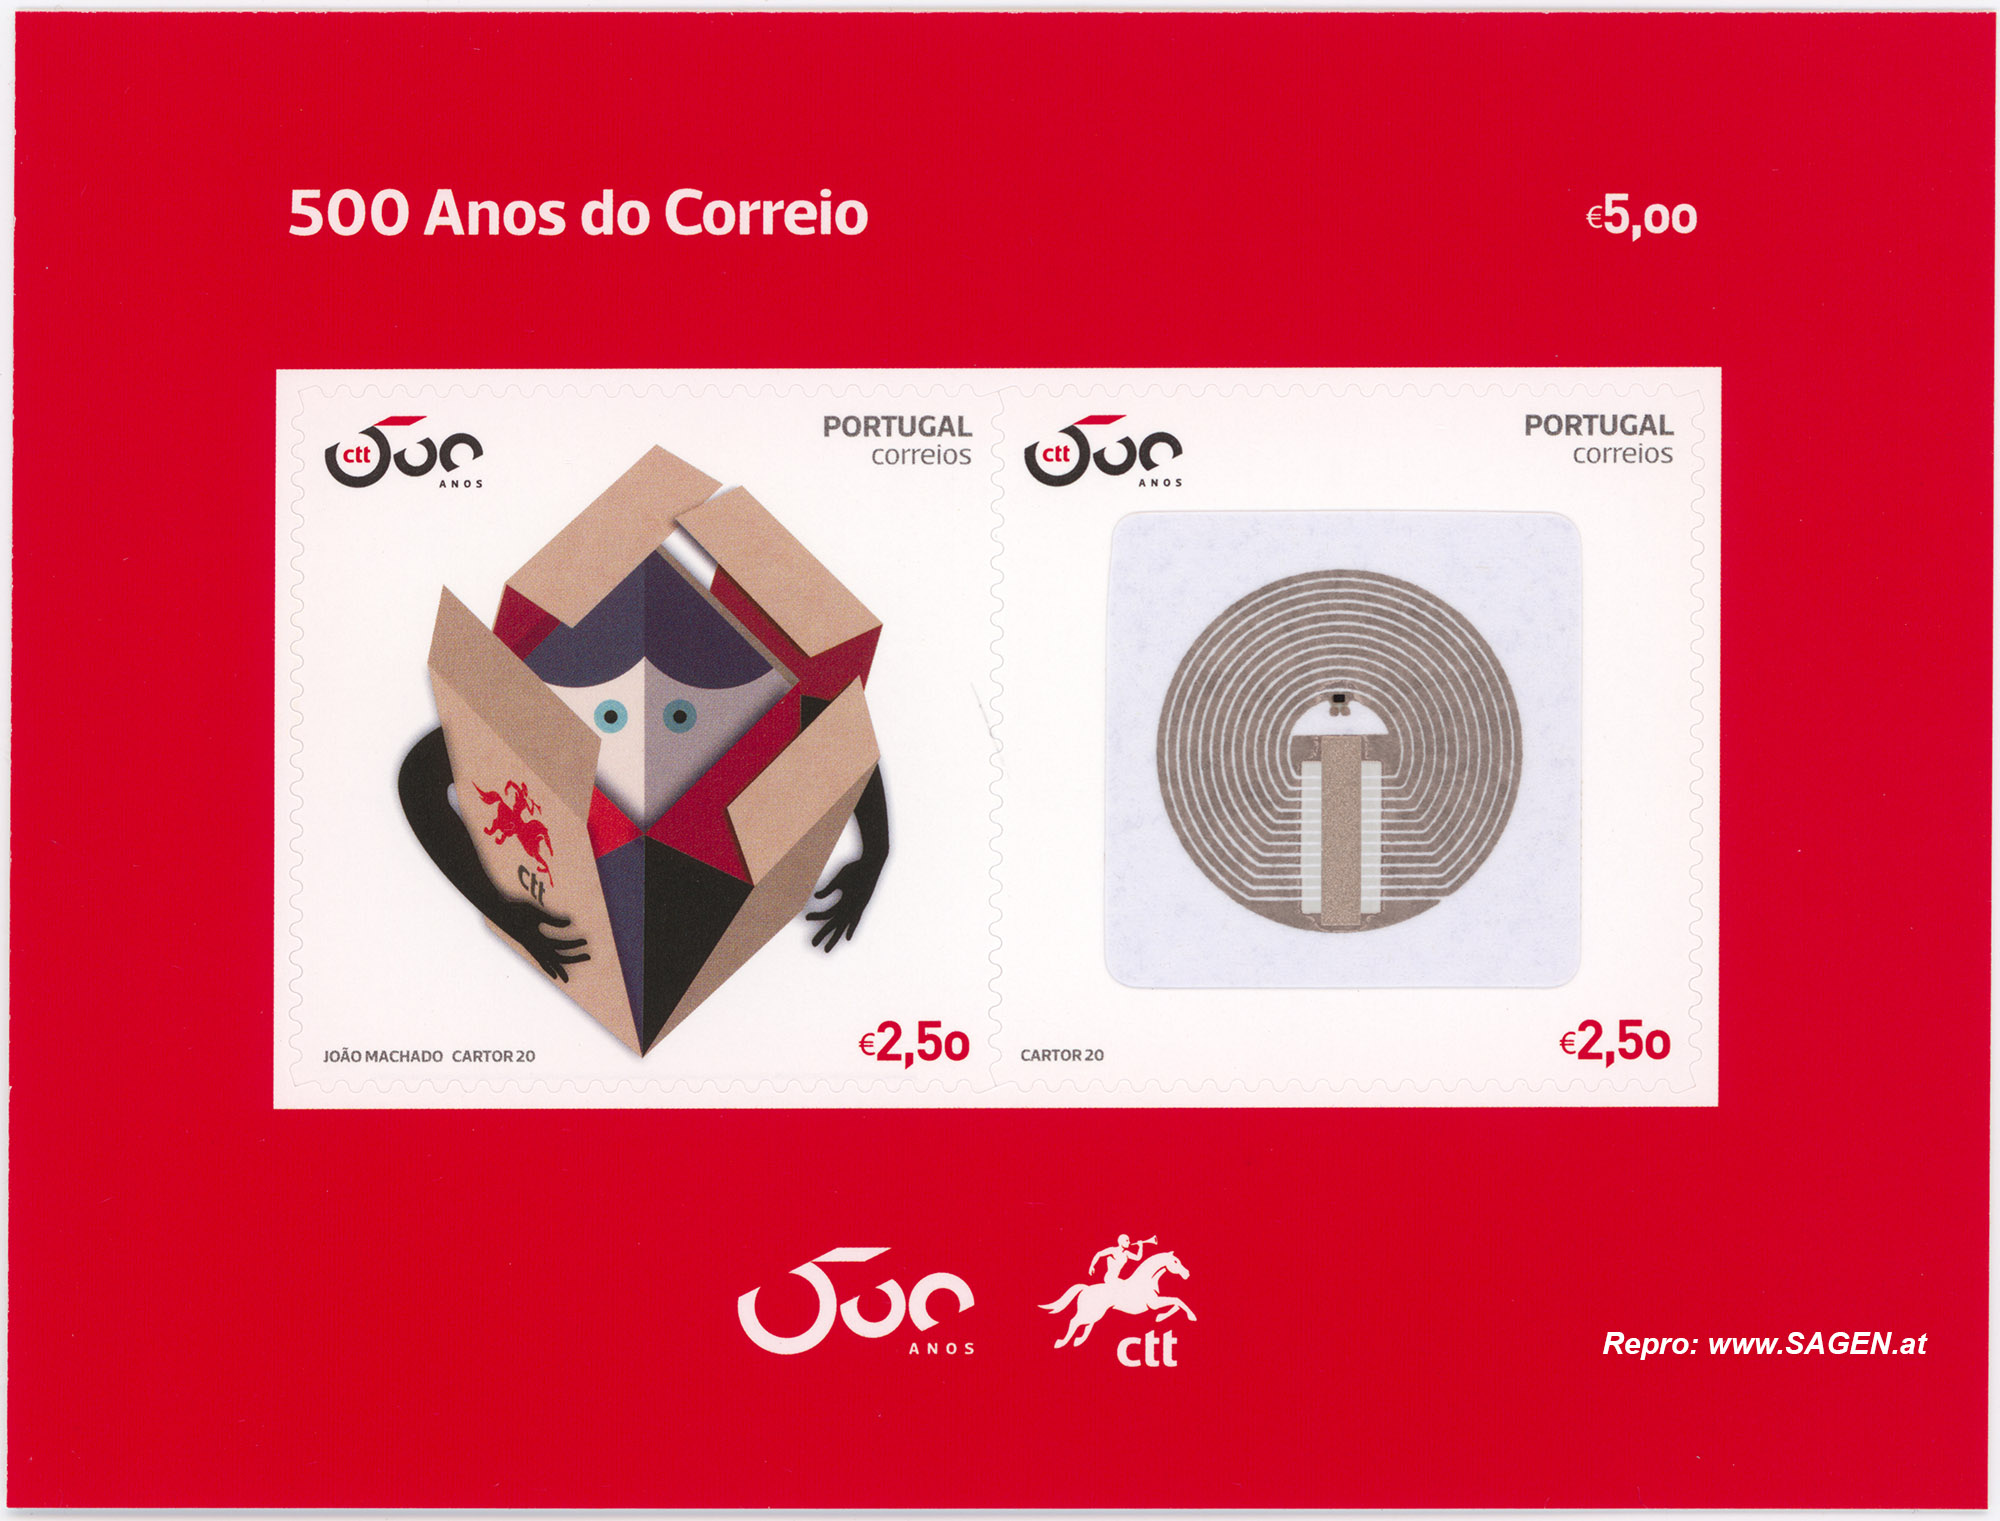 COVID-19 / Corona Briefmarke